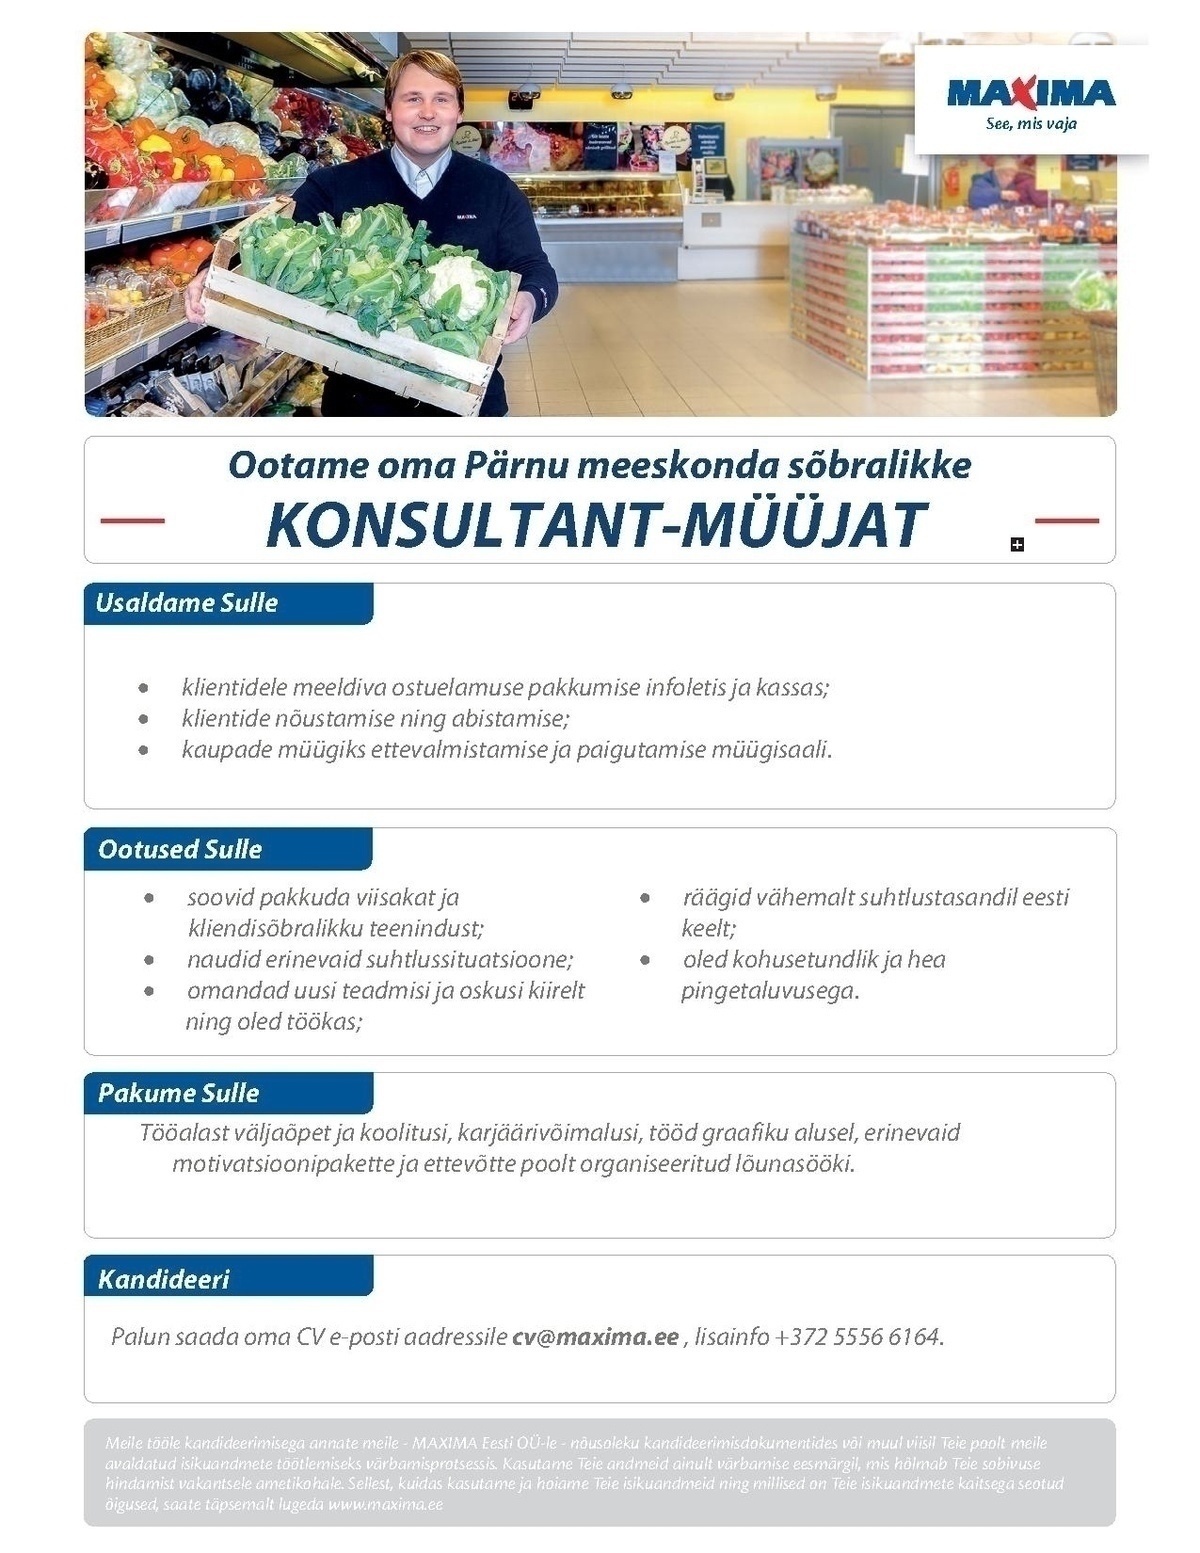 Maxima Eesti OÜ Konsultant-müüja (infolett) Pärnu Maximas